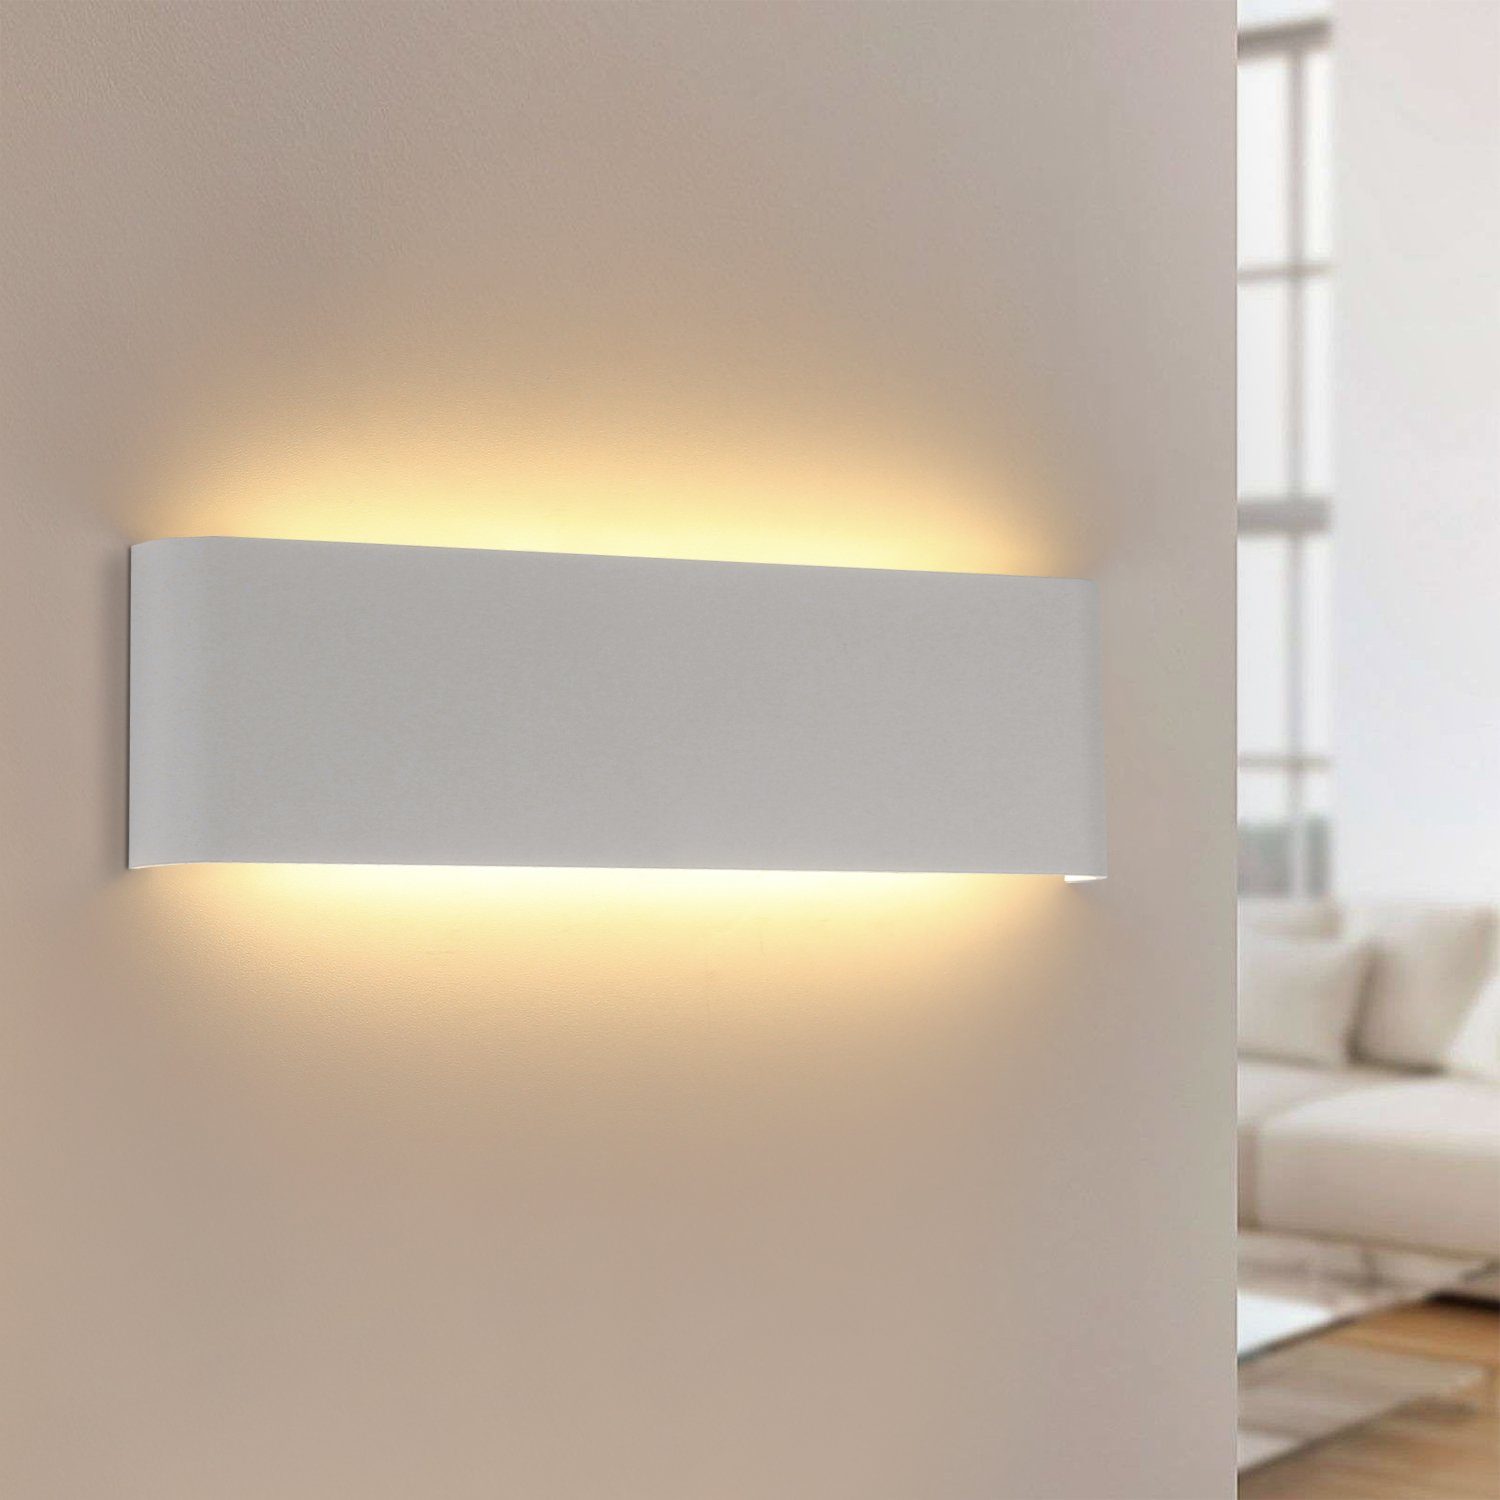 2 x LED Wand Leuchte UP DOWN Wohn Zimmer Beleuchtung ALU Spiegel Lampe gebürstet 